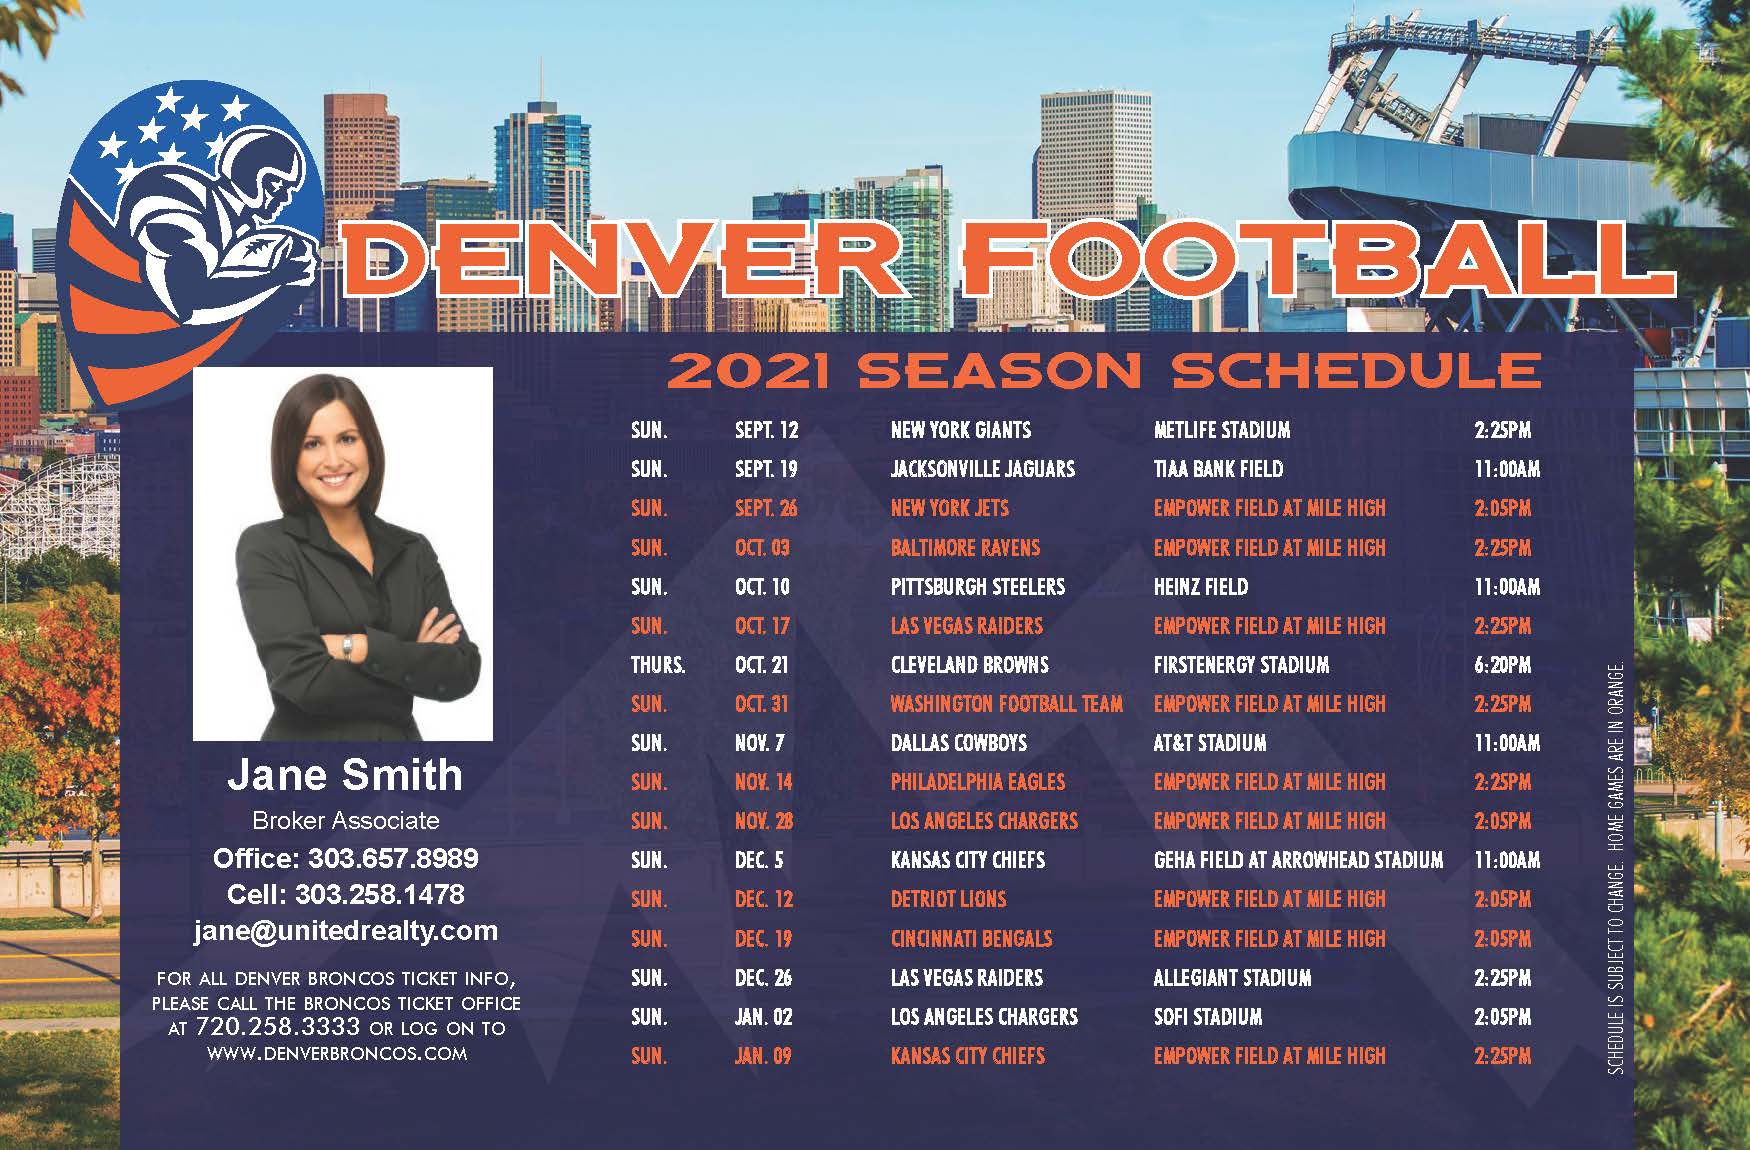 Broncos Postcard 2021